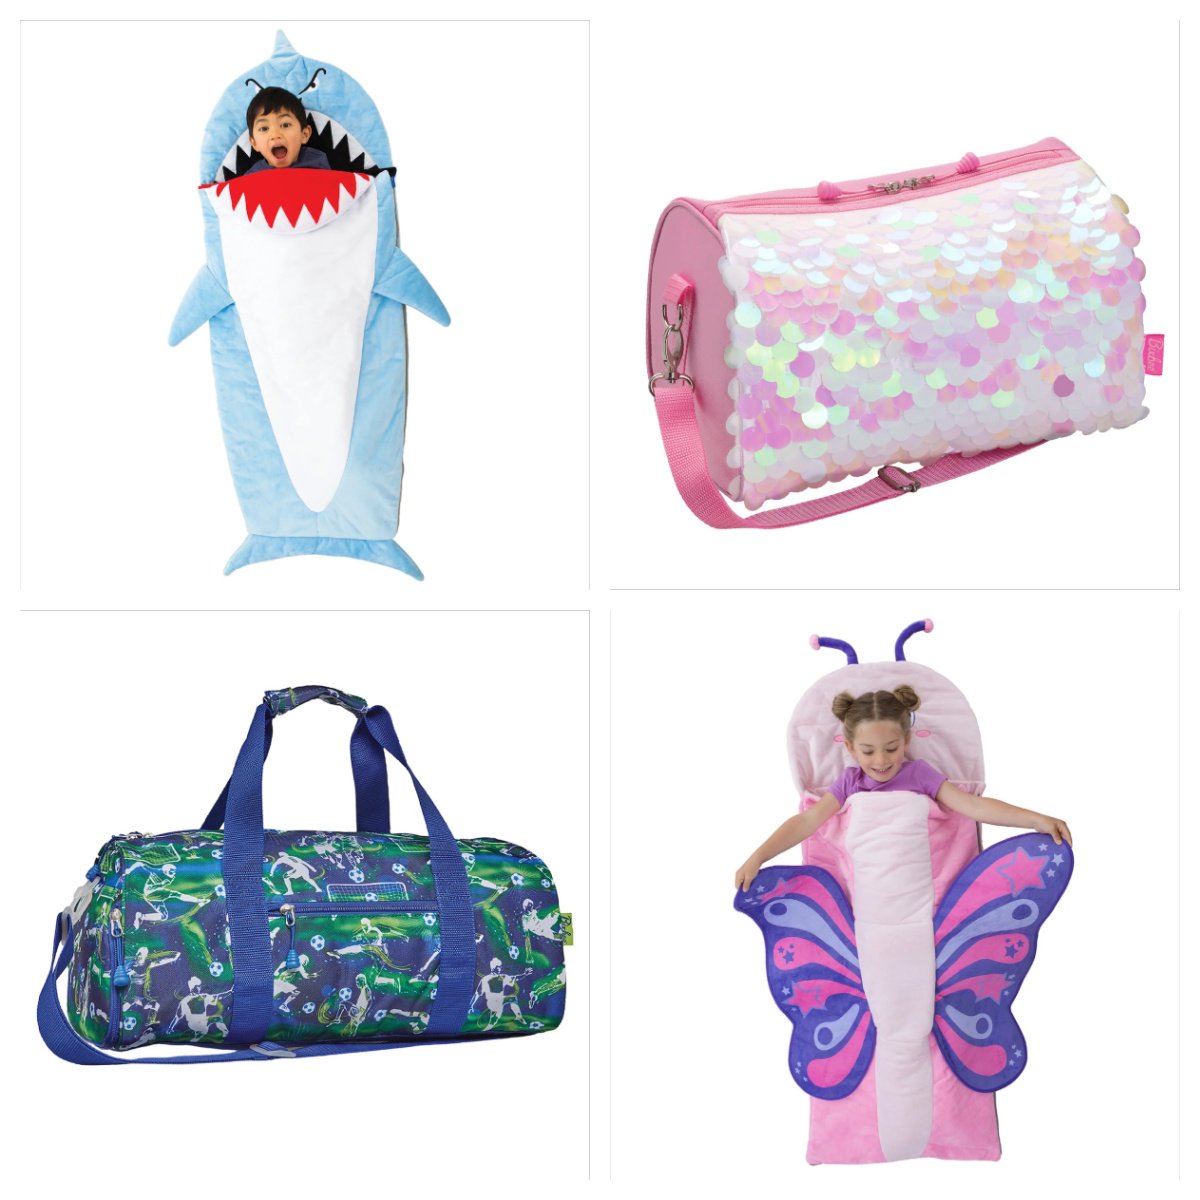 Bixbee sleeping bags- shark and butterfly. 2 duffle bags.